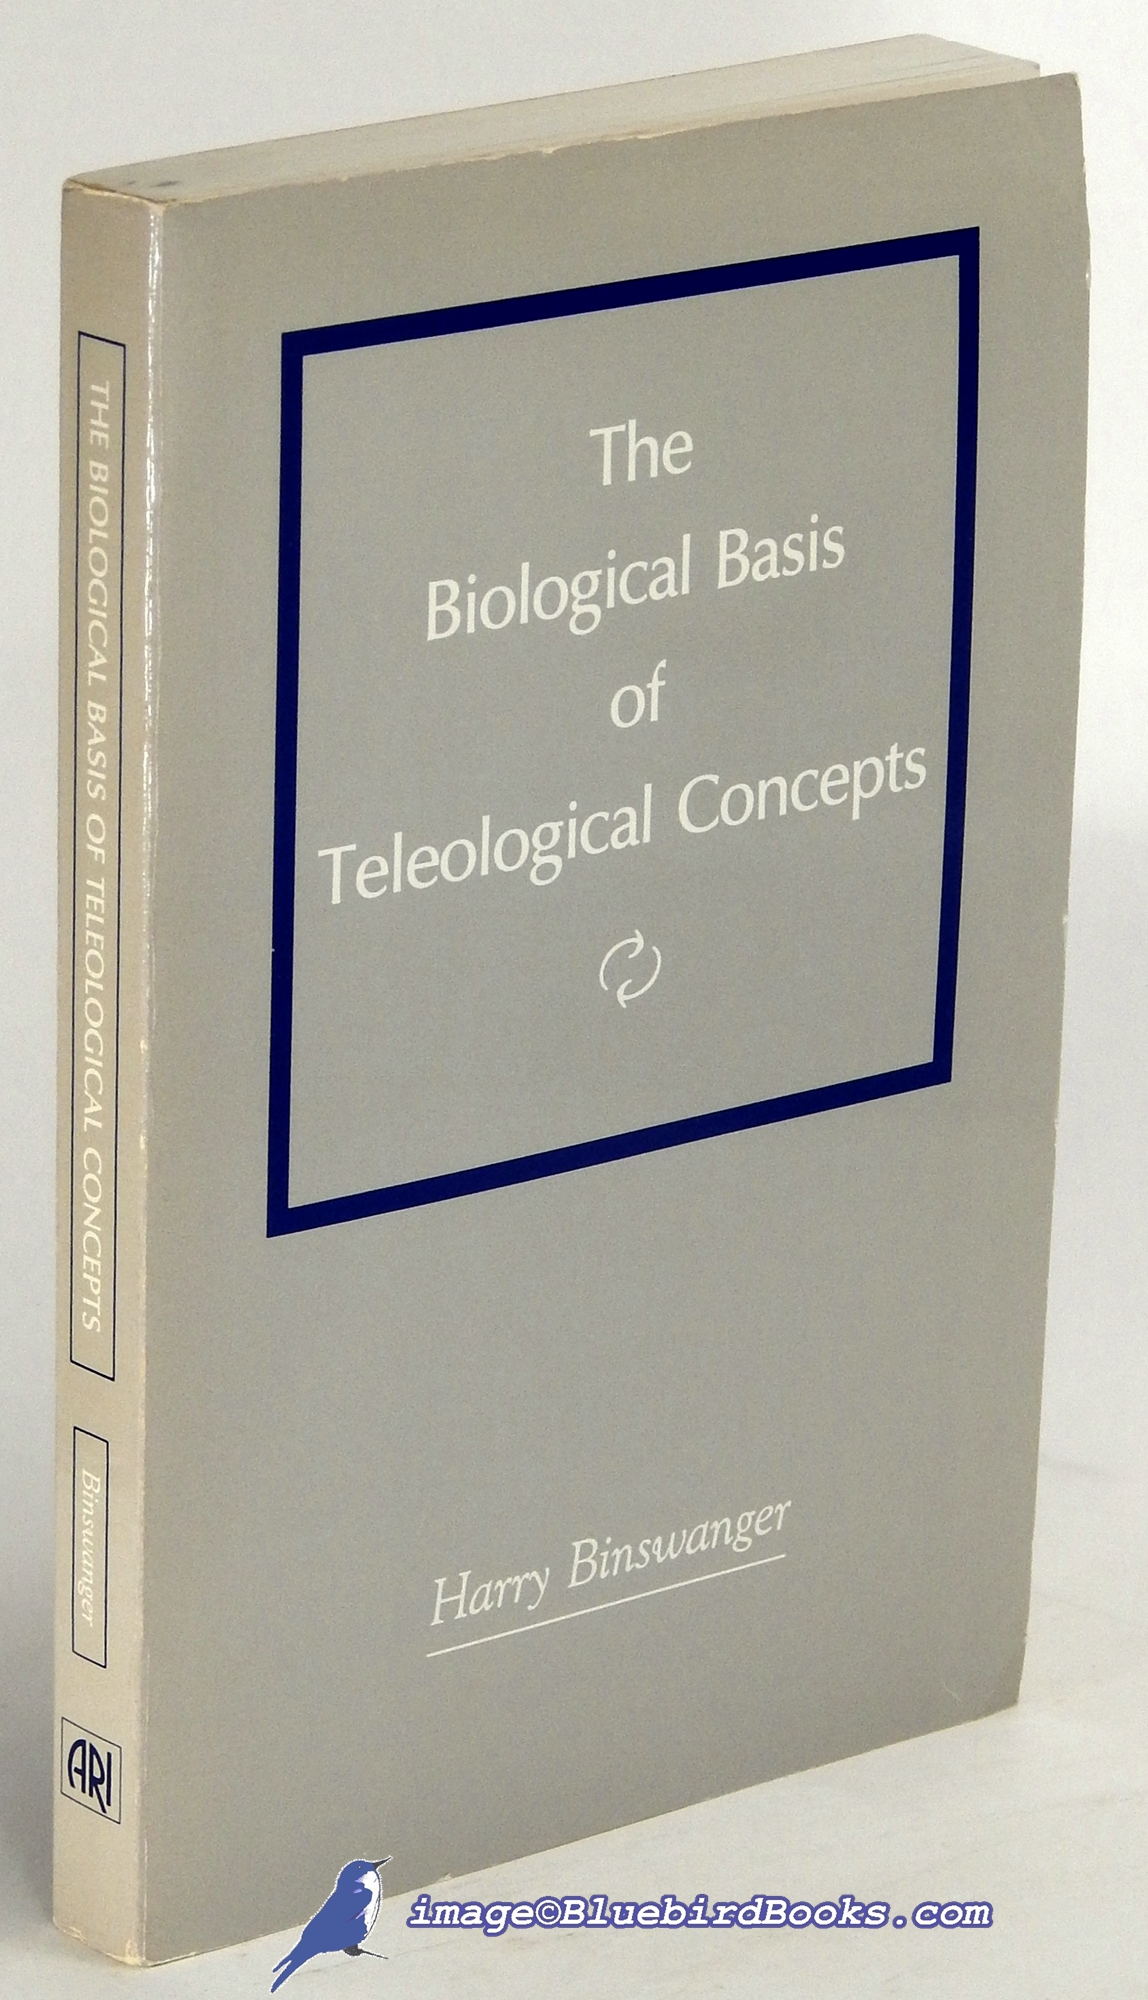 BINSWANGER, HARRY - The Biological Basis of Teleological Concepts